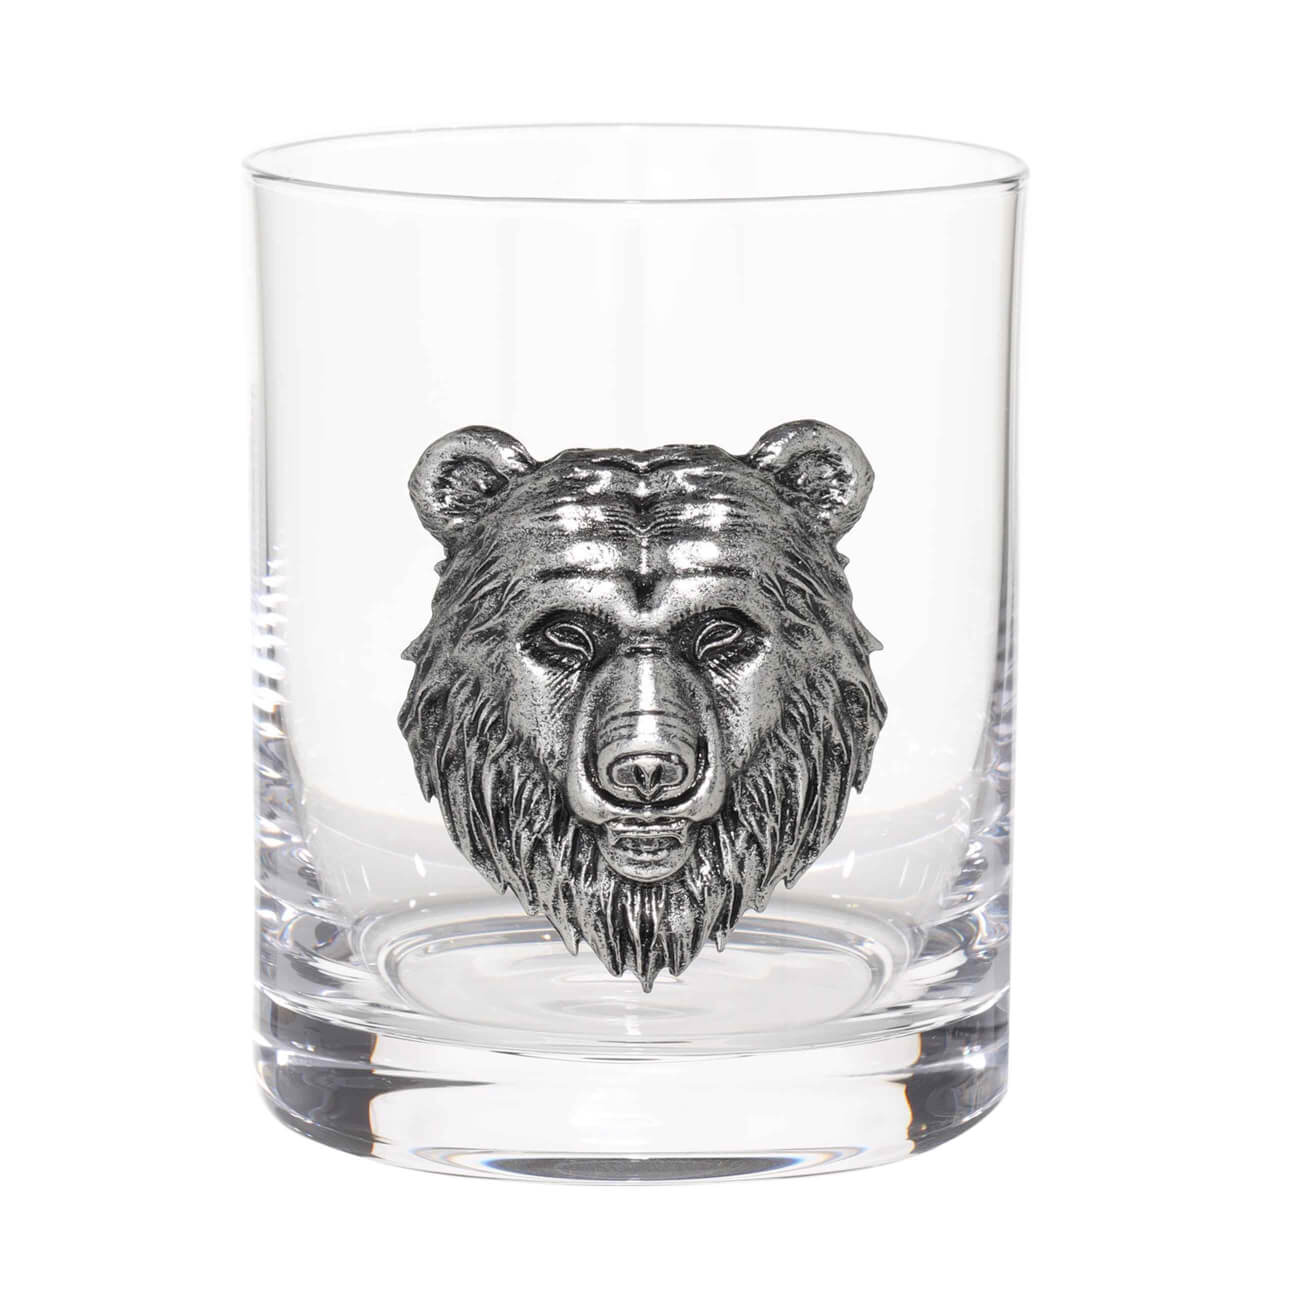 Стакан для виски, 10 см, 340 мл, стекло/металл, серебристый, Медведь, Lux elements ваза стекло настольная 8 см декостек виски 767 н5